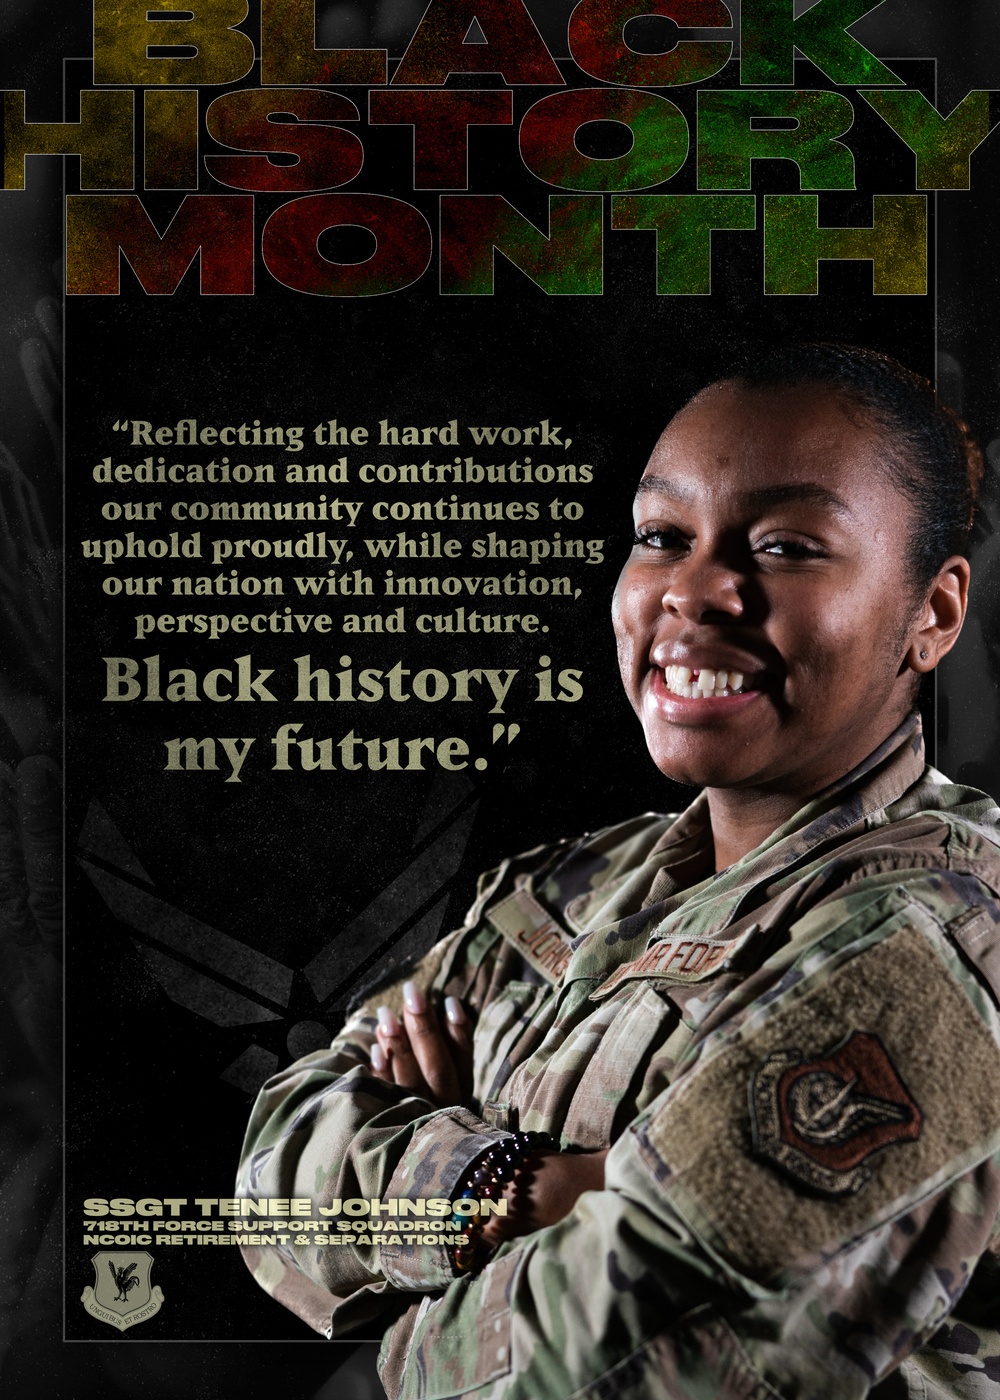 Kadena celebrates Black History Month